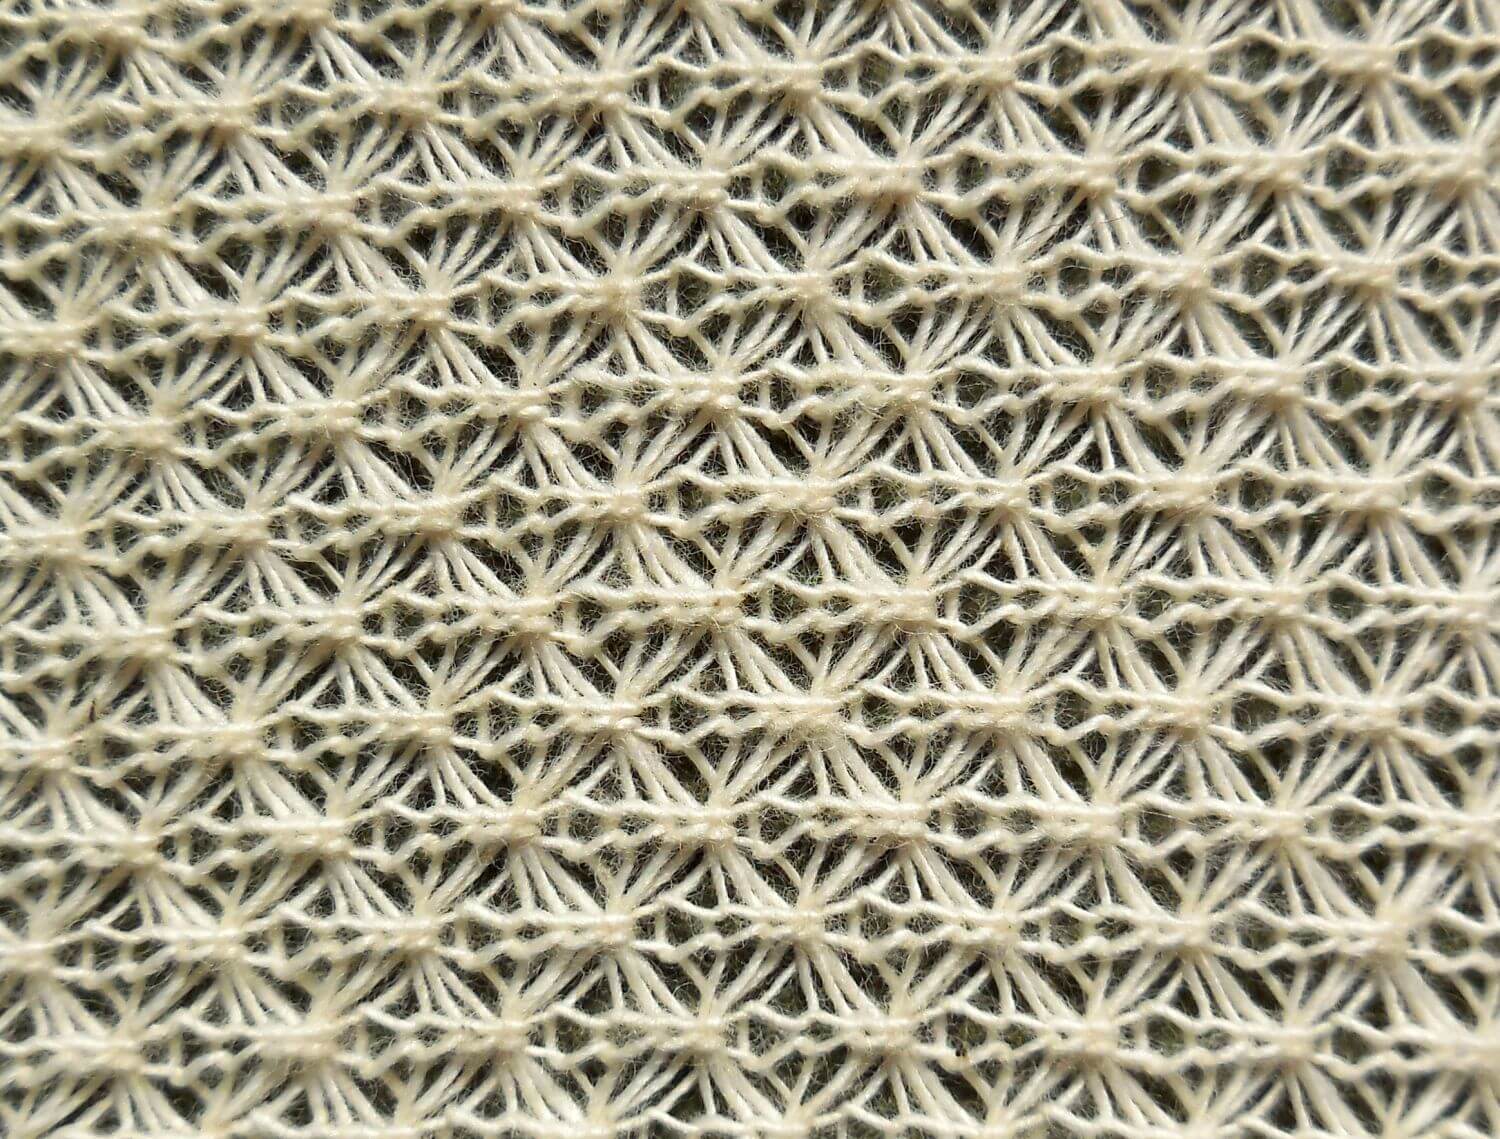 Natural Original Net (Cotton fiber)